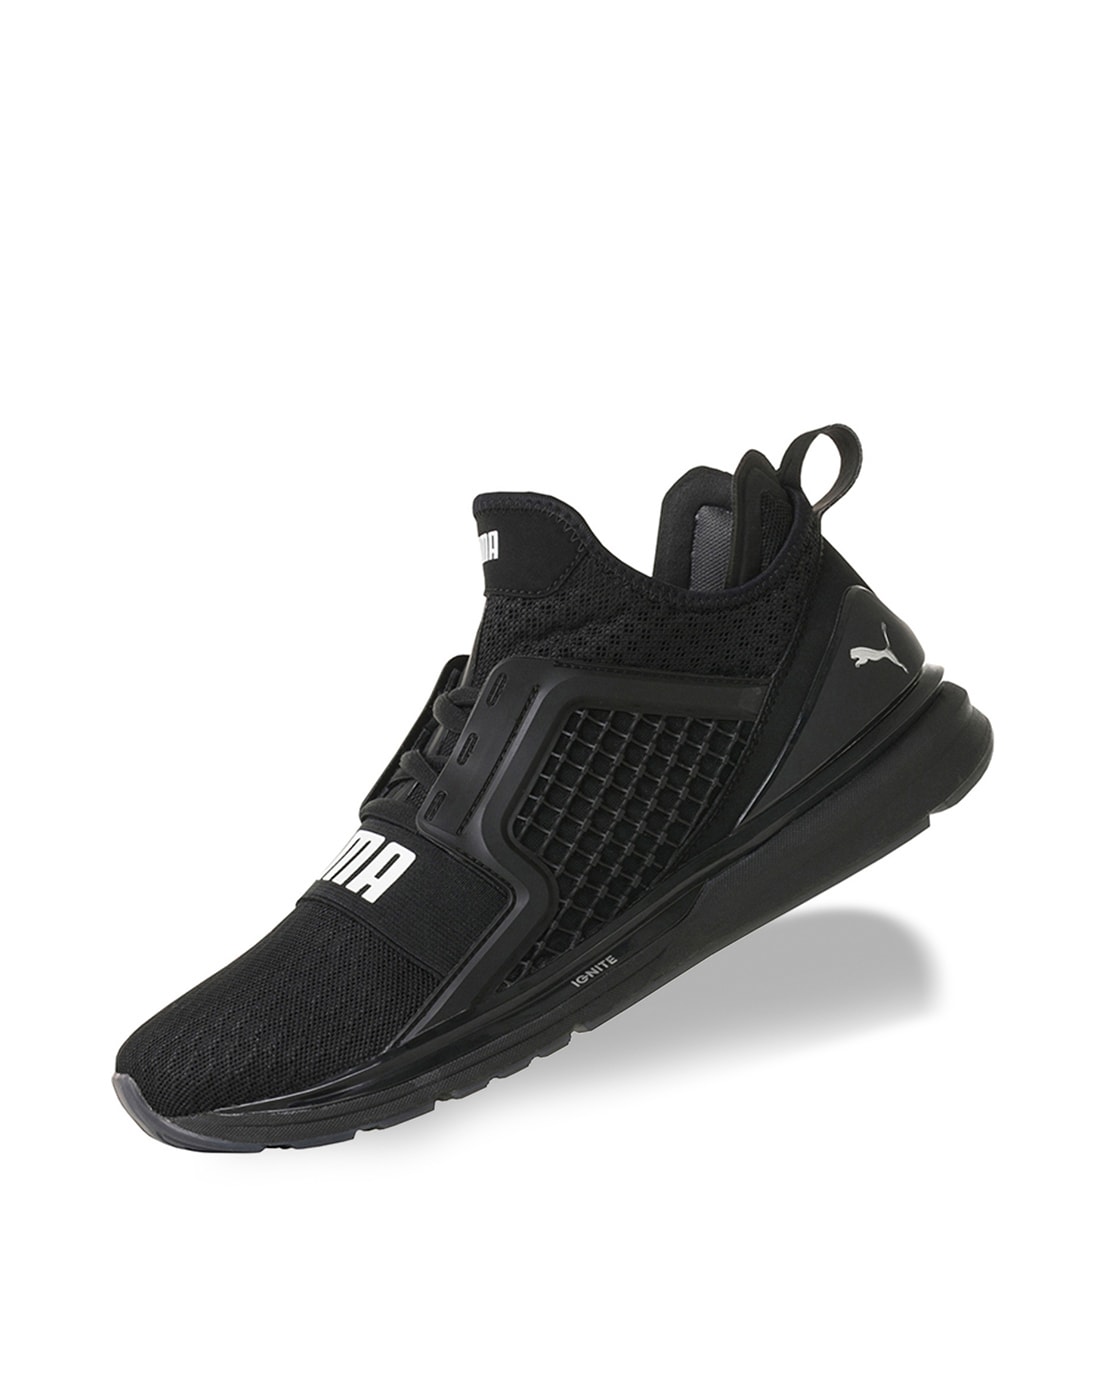 Buy Black Casual Shoes for Men by Puma Online Ajio.com